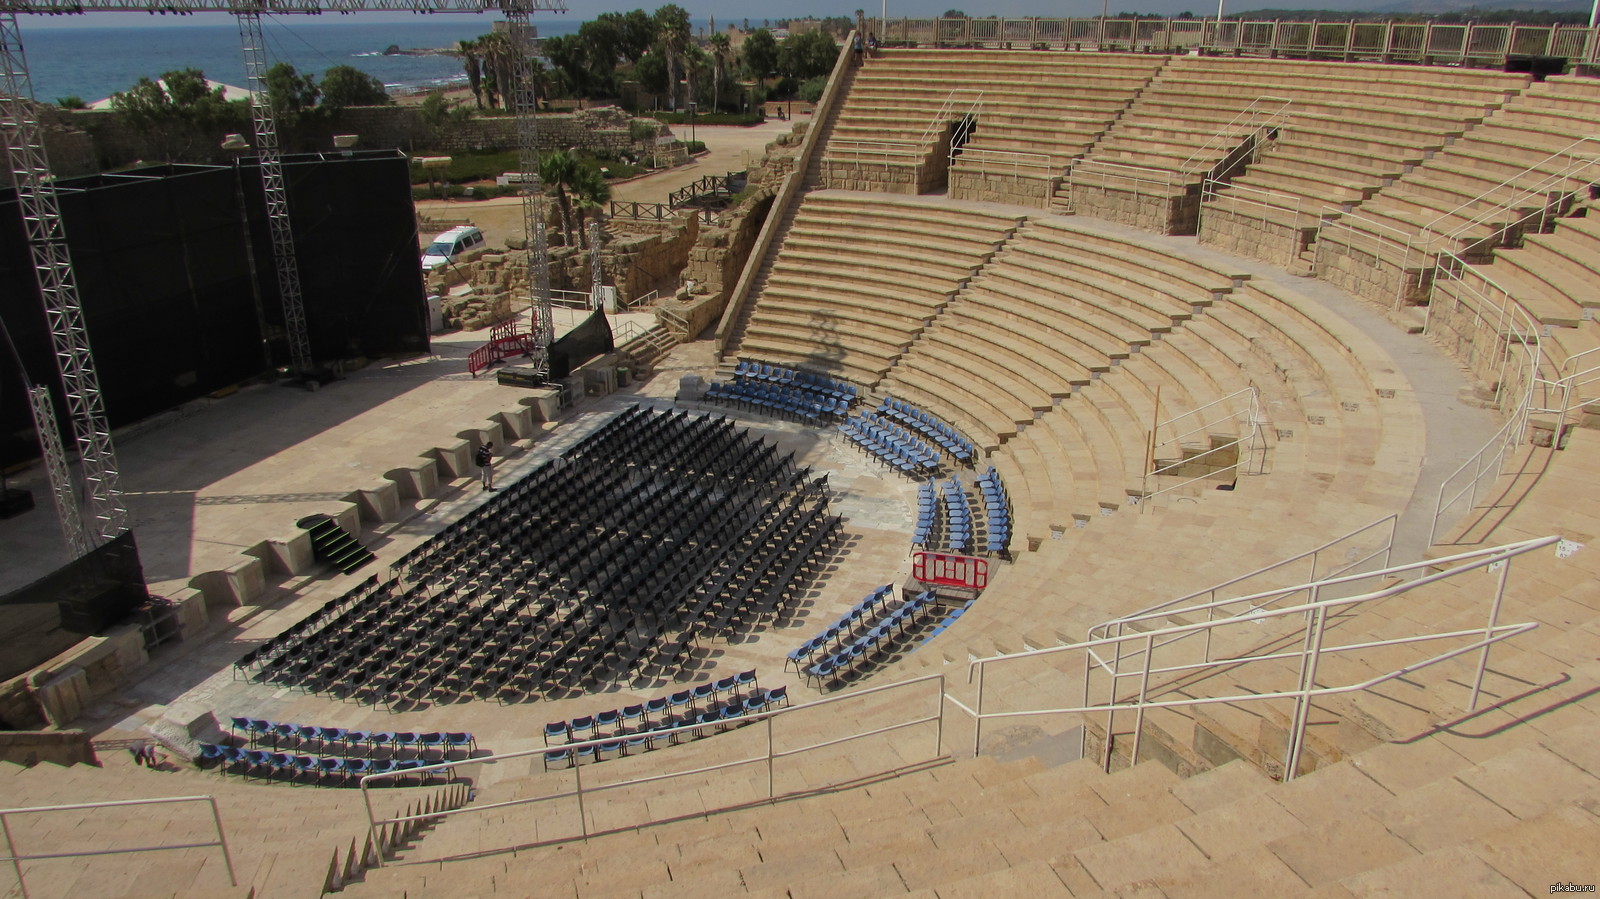 Ancient Roman amphitheater in Caesarea (Caesarea) - Archeology, Story, Ancient Rome, Amphitheatre, My